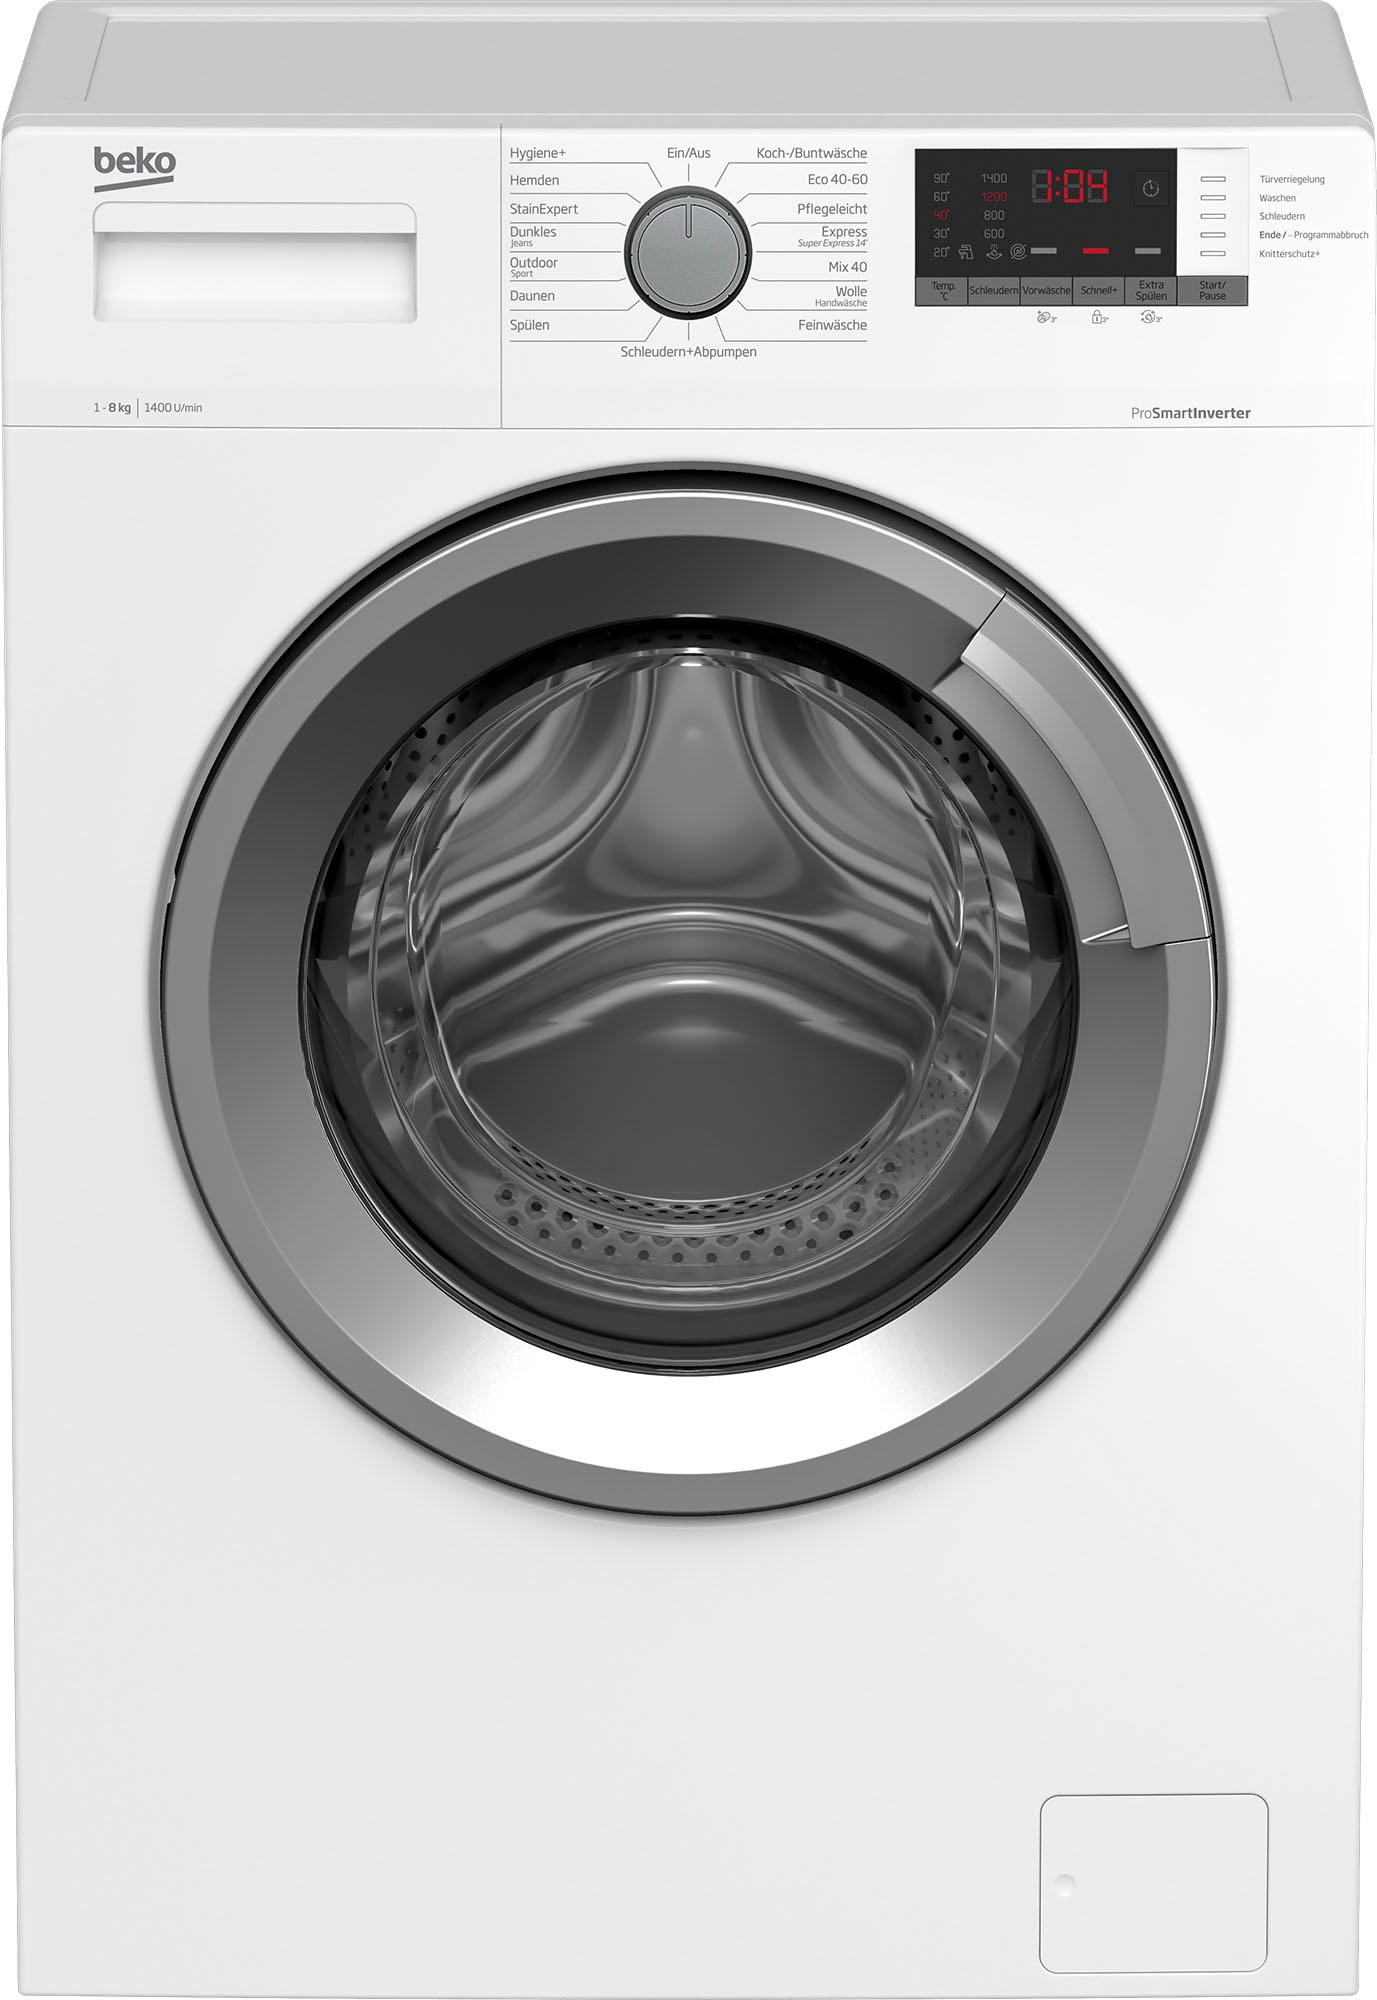 Online jetzt 8 OTTO BEKO Waschmaschine im 7001440096, kg, U/min WMO822A Shop »WMO822A«, 1400